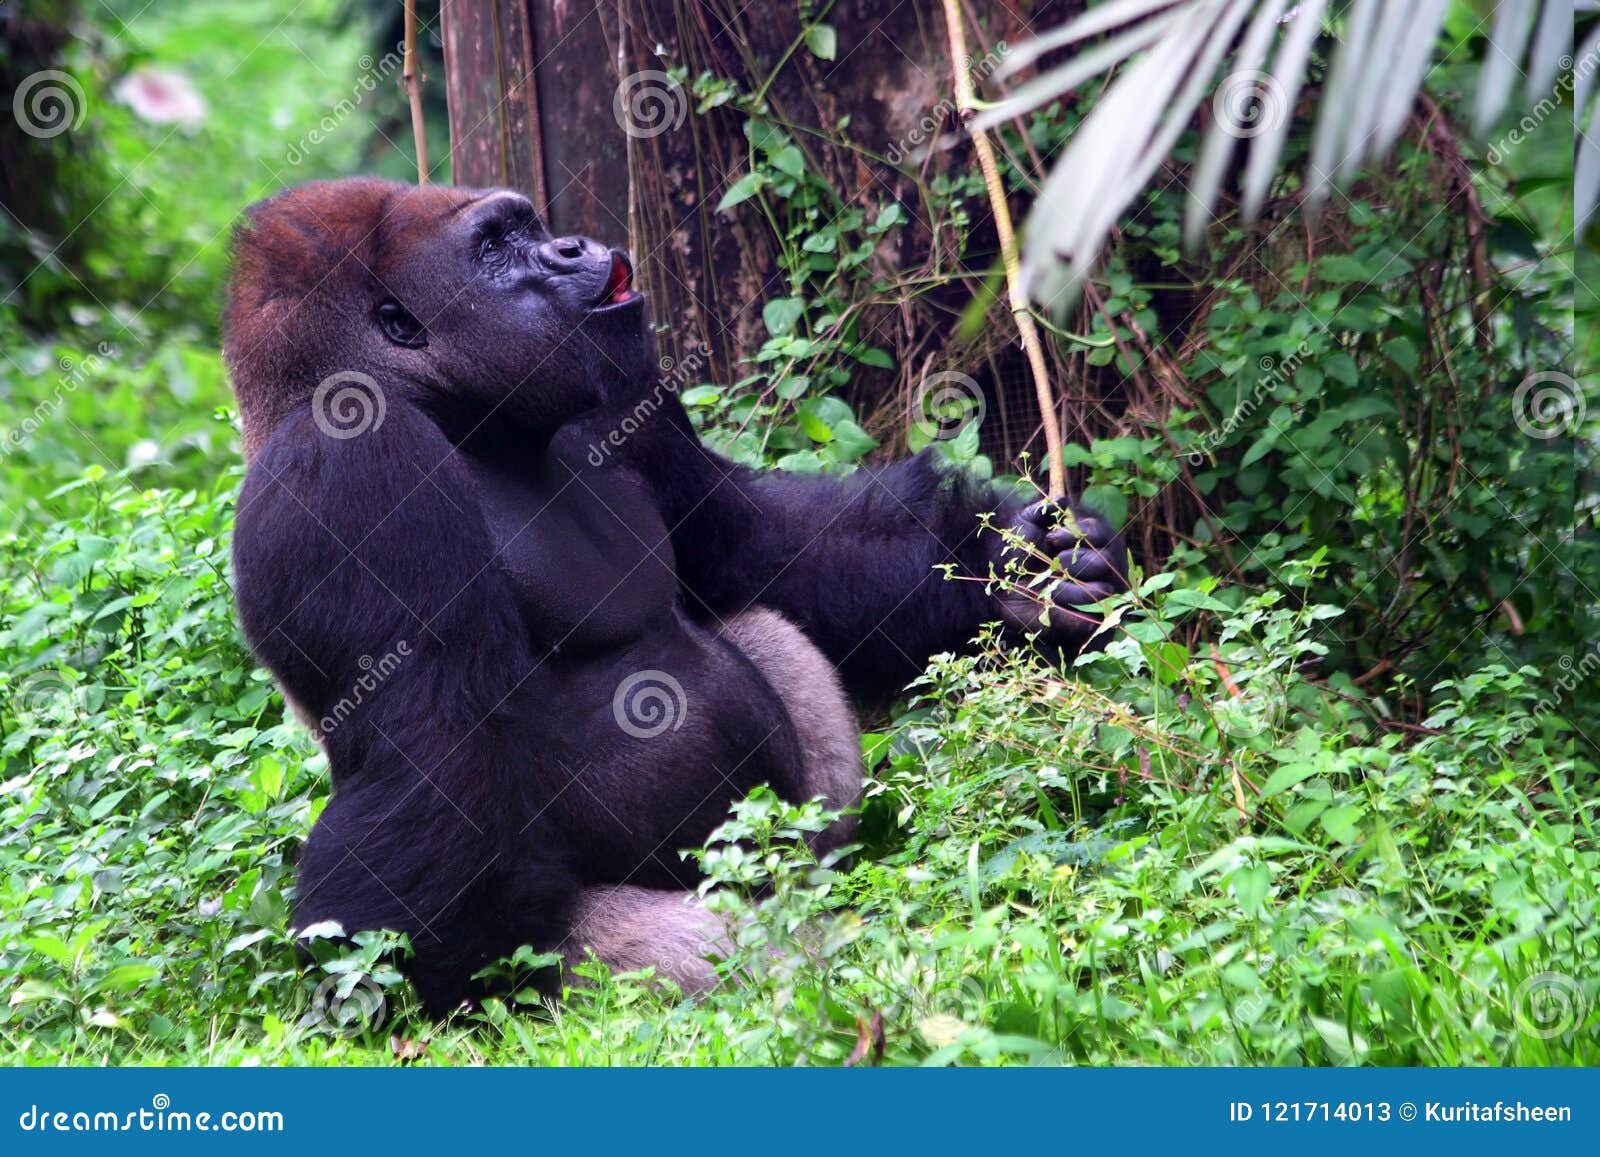 gorila on jungle, gorila lonely